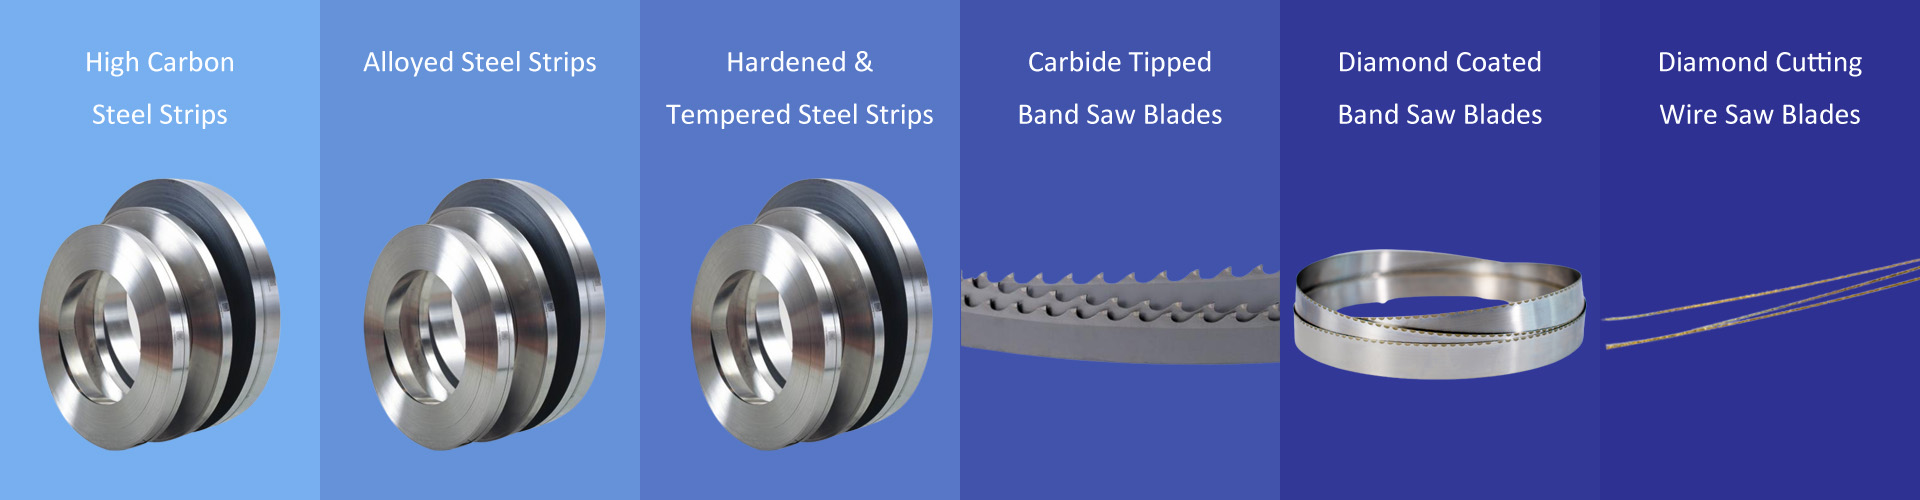 supplying precision steel strips, band saw blades